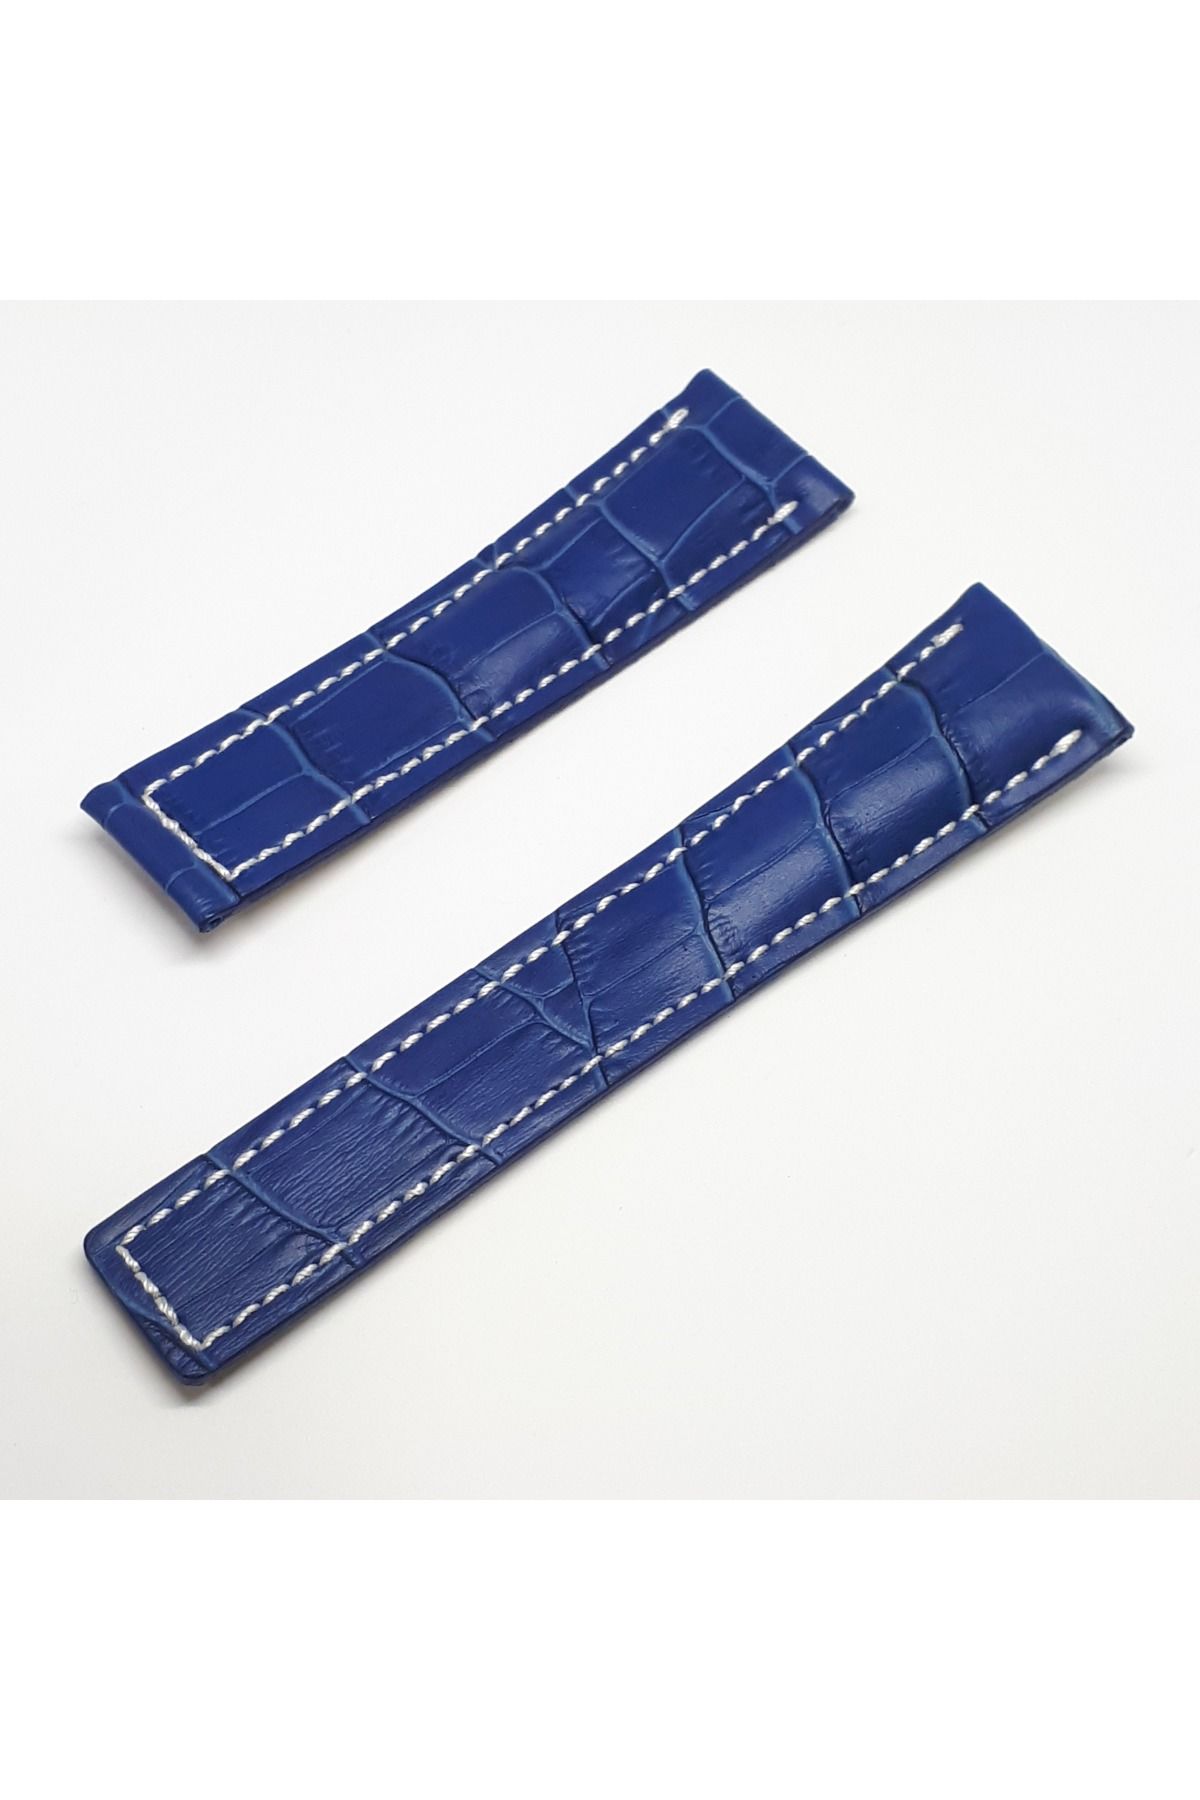 Breitling Uyumlu Croco Deri Saat Kordonu Kayışı 24mm - Mavi